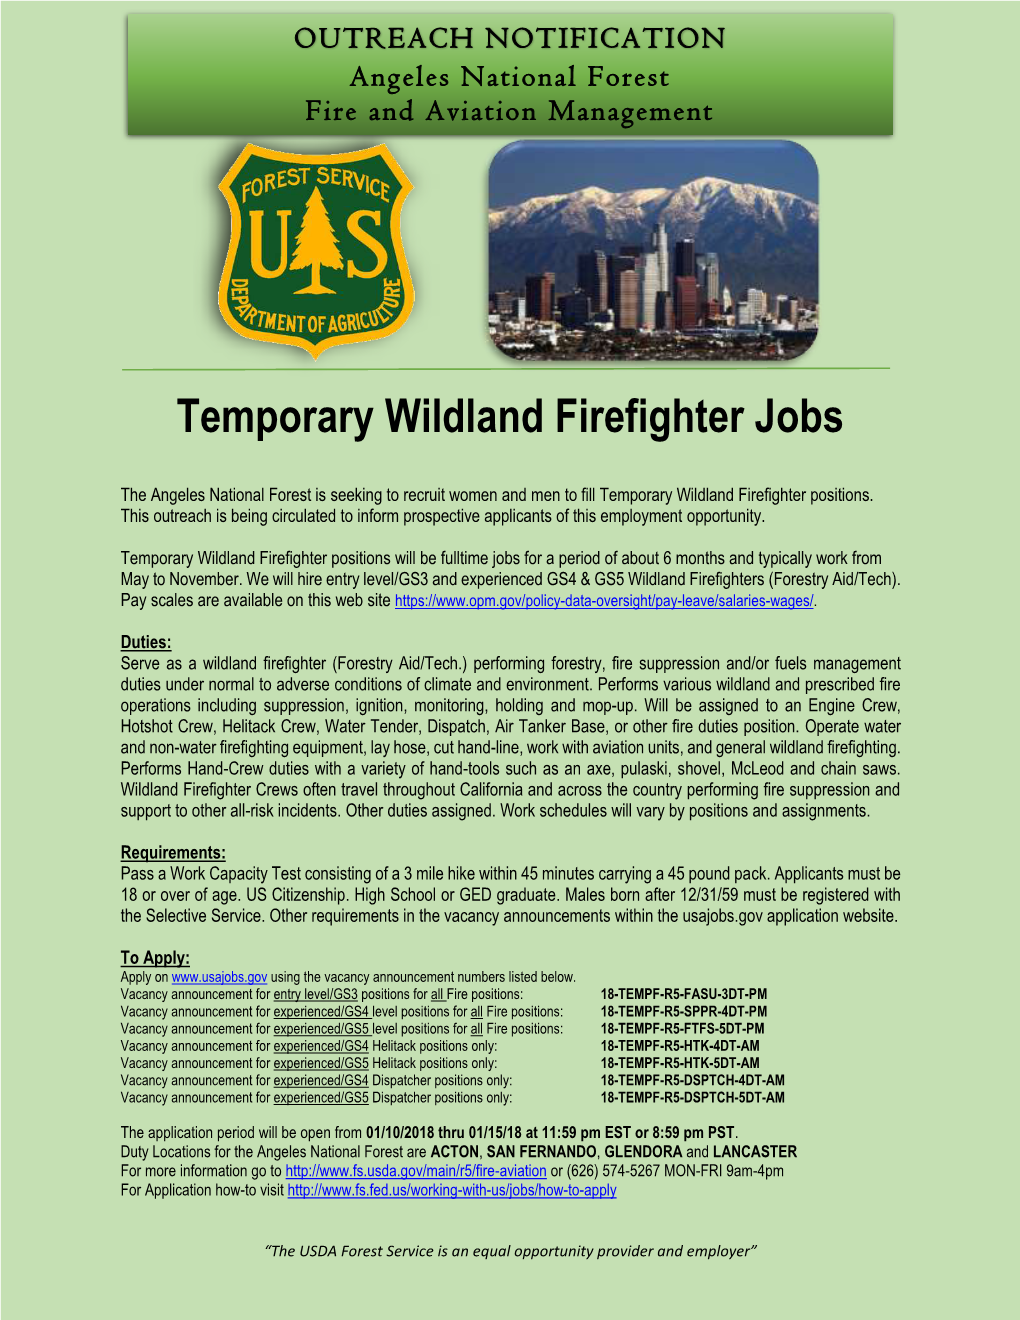 Temporary Wildland Firefighter Jobs